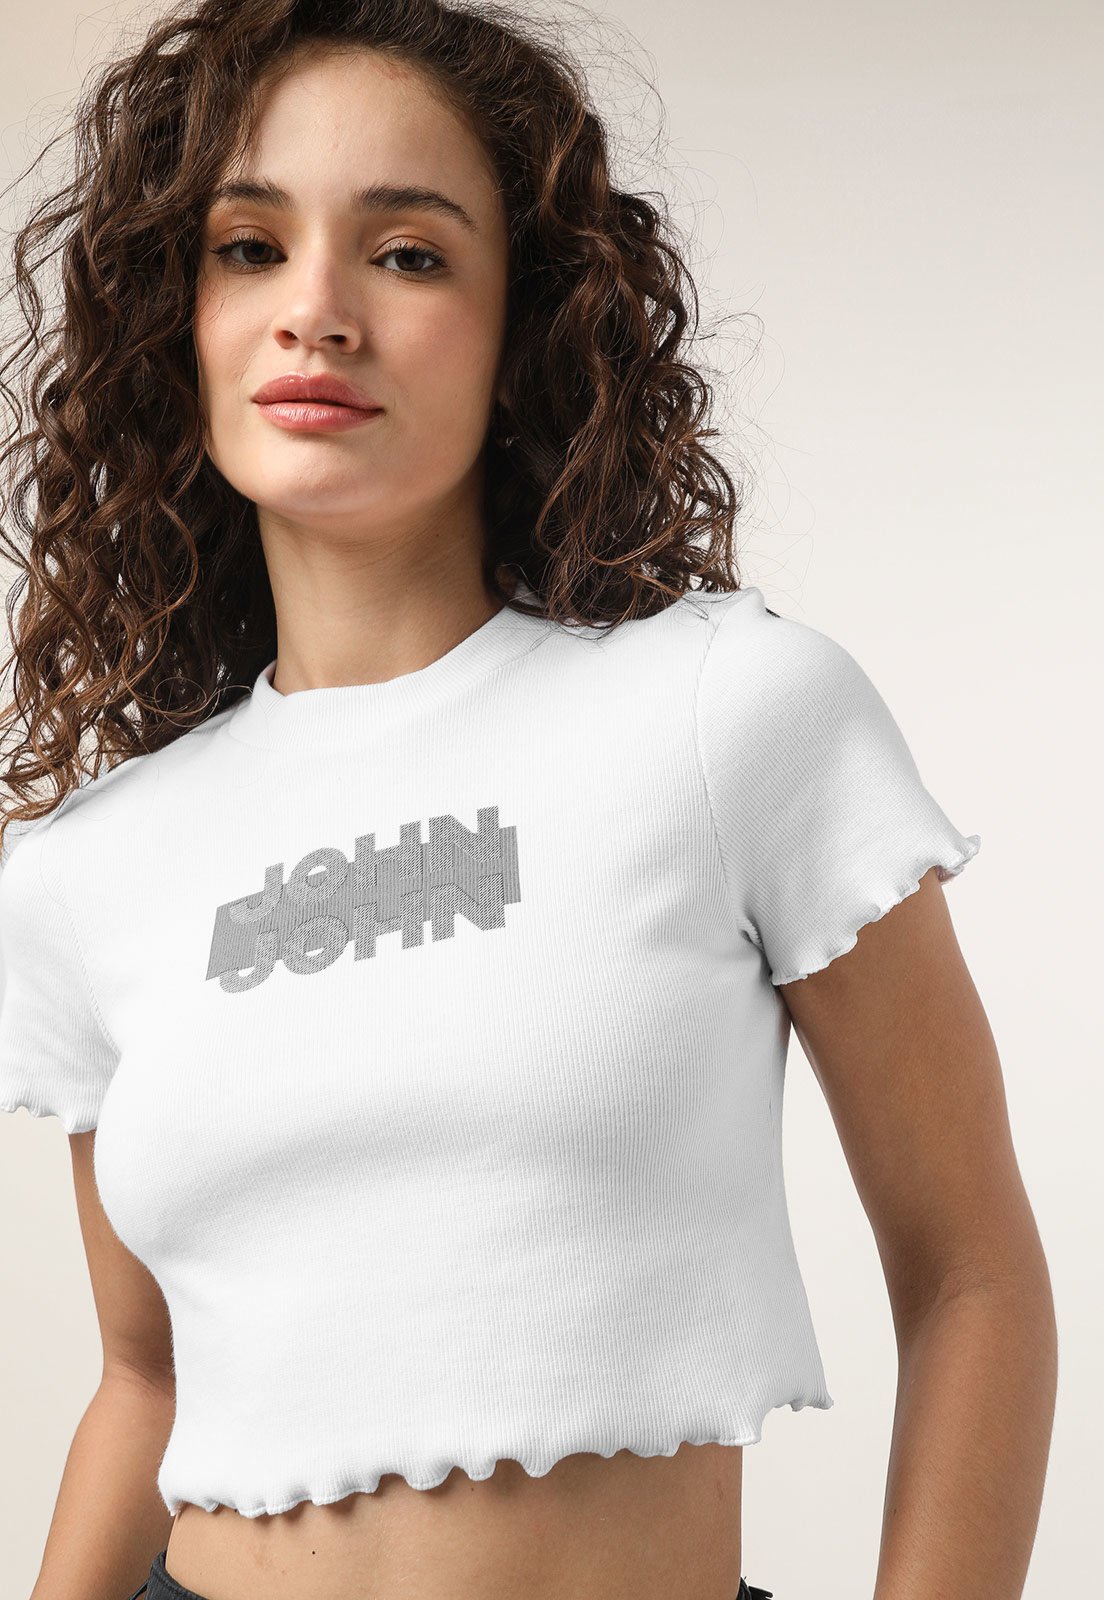 Camiseta Cropped John John Key Branca - Compre Agora